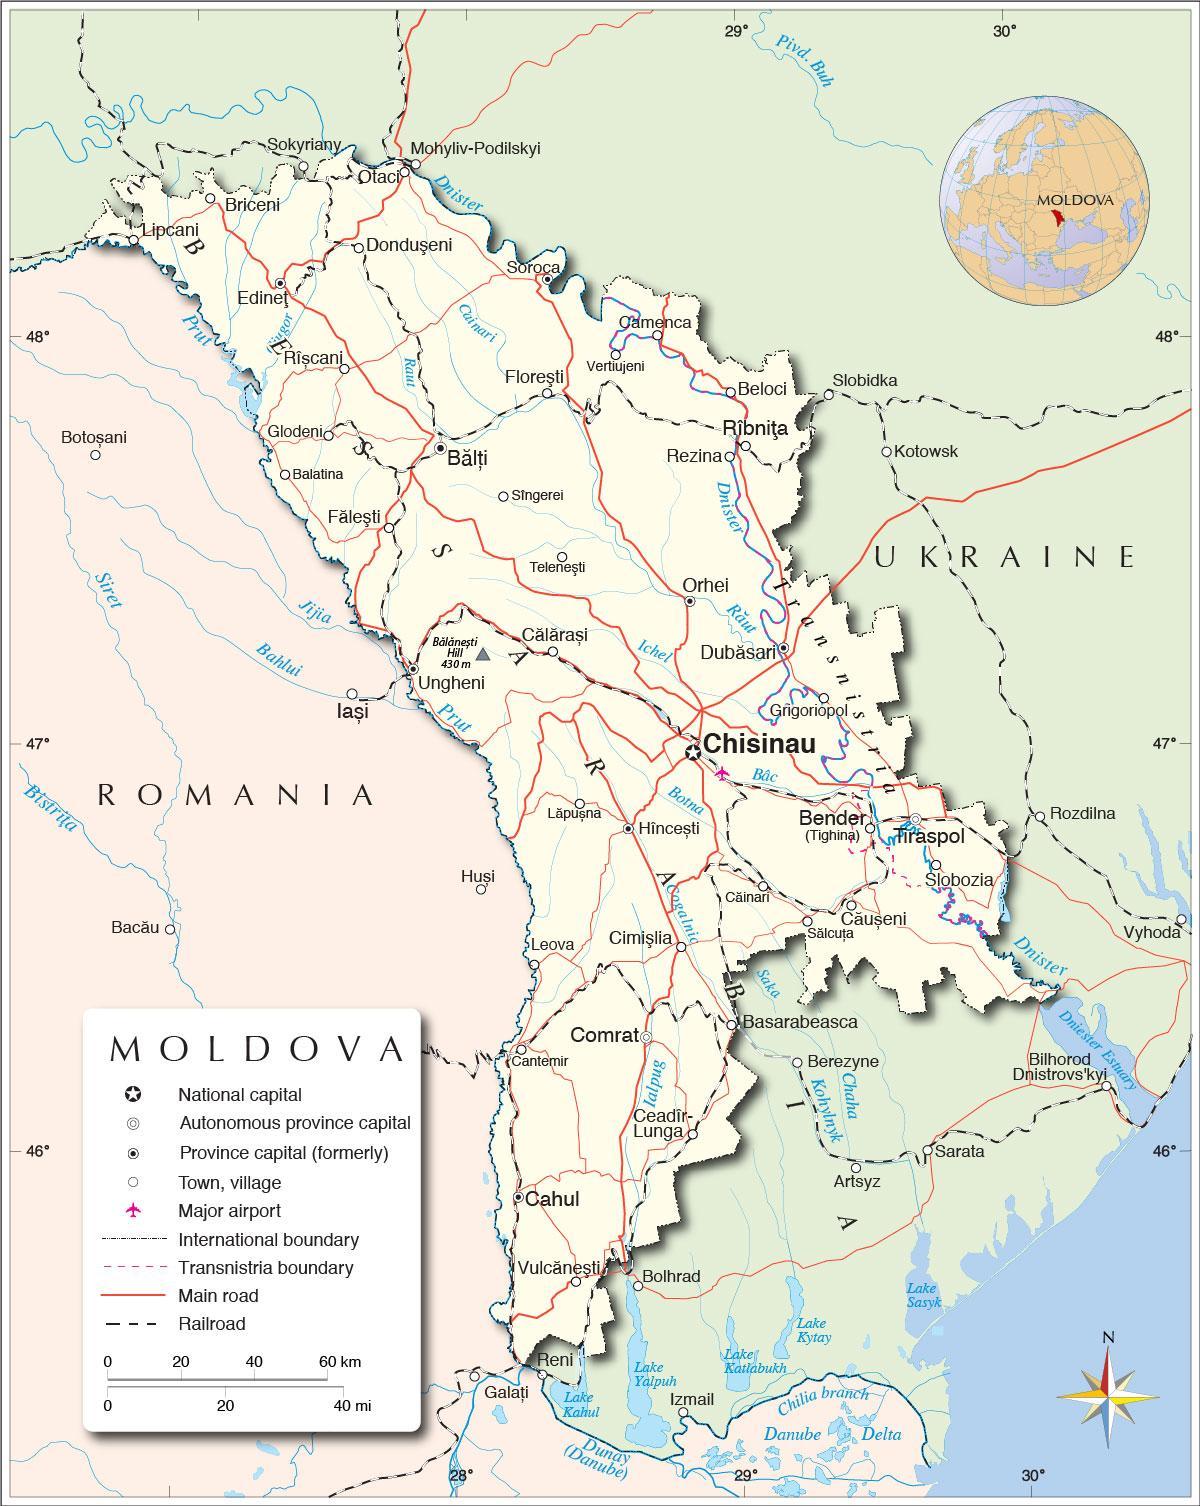 Mapa de la república de Moldavia